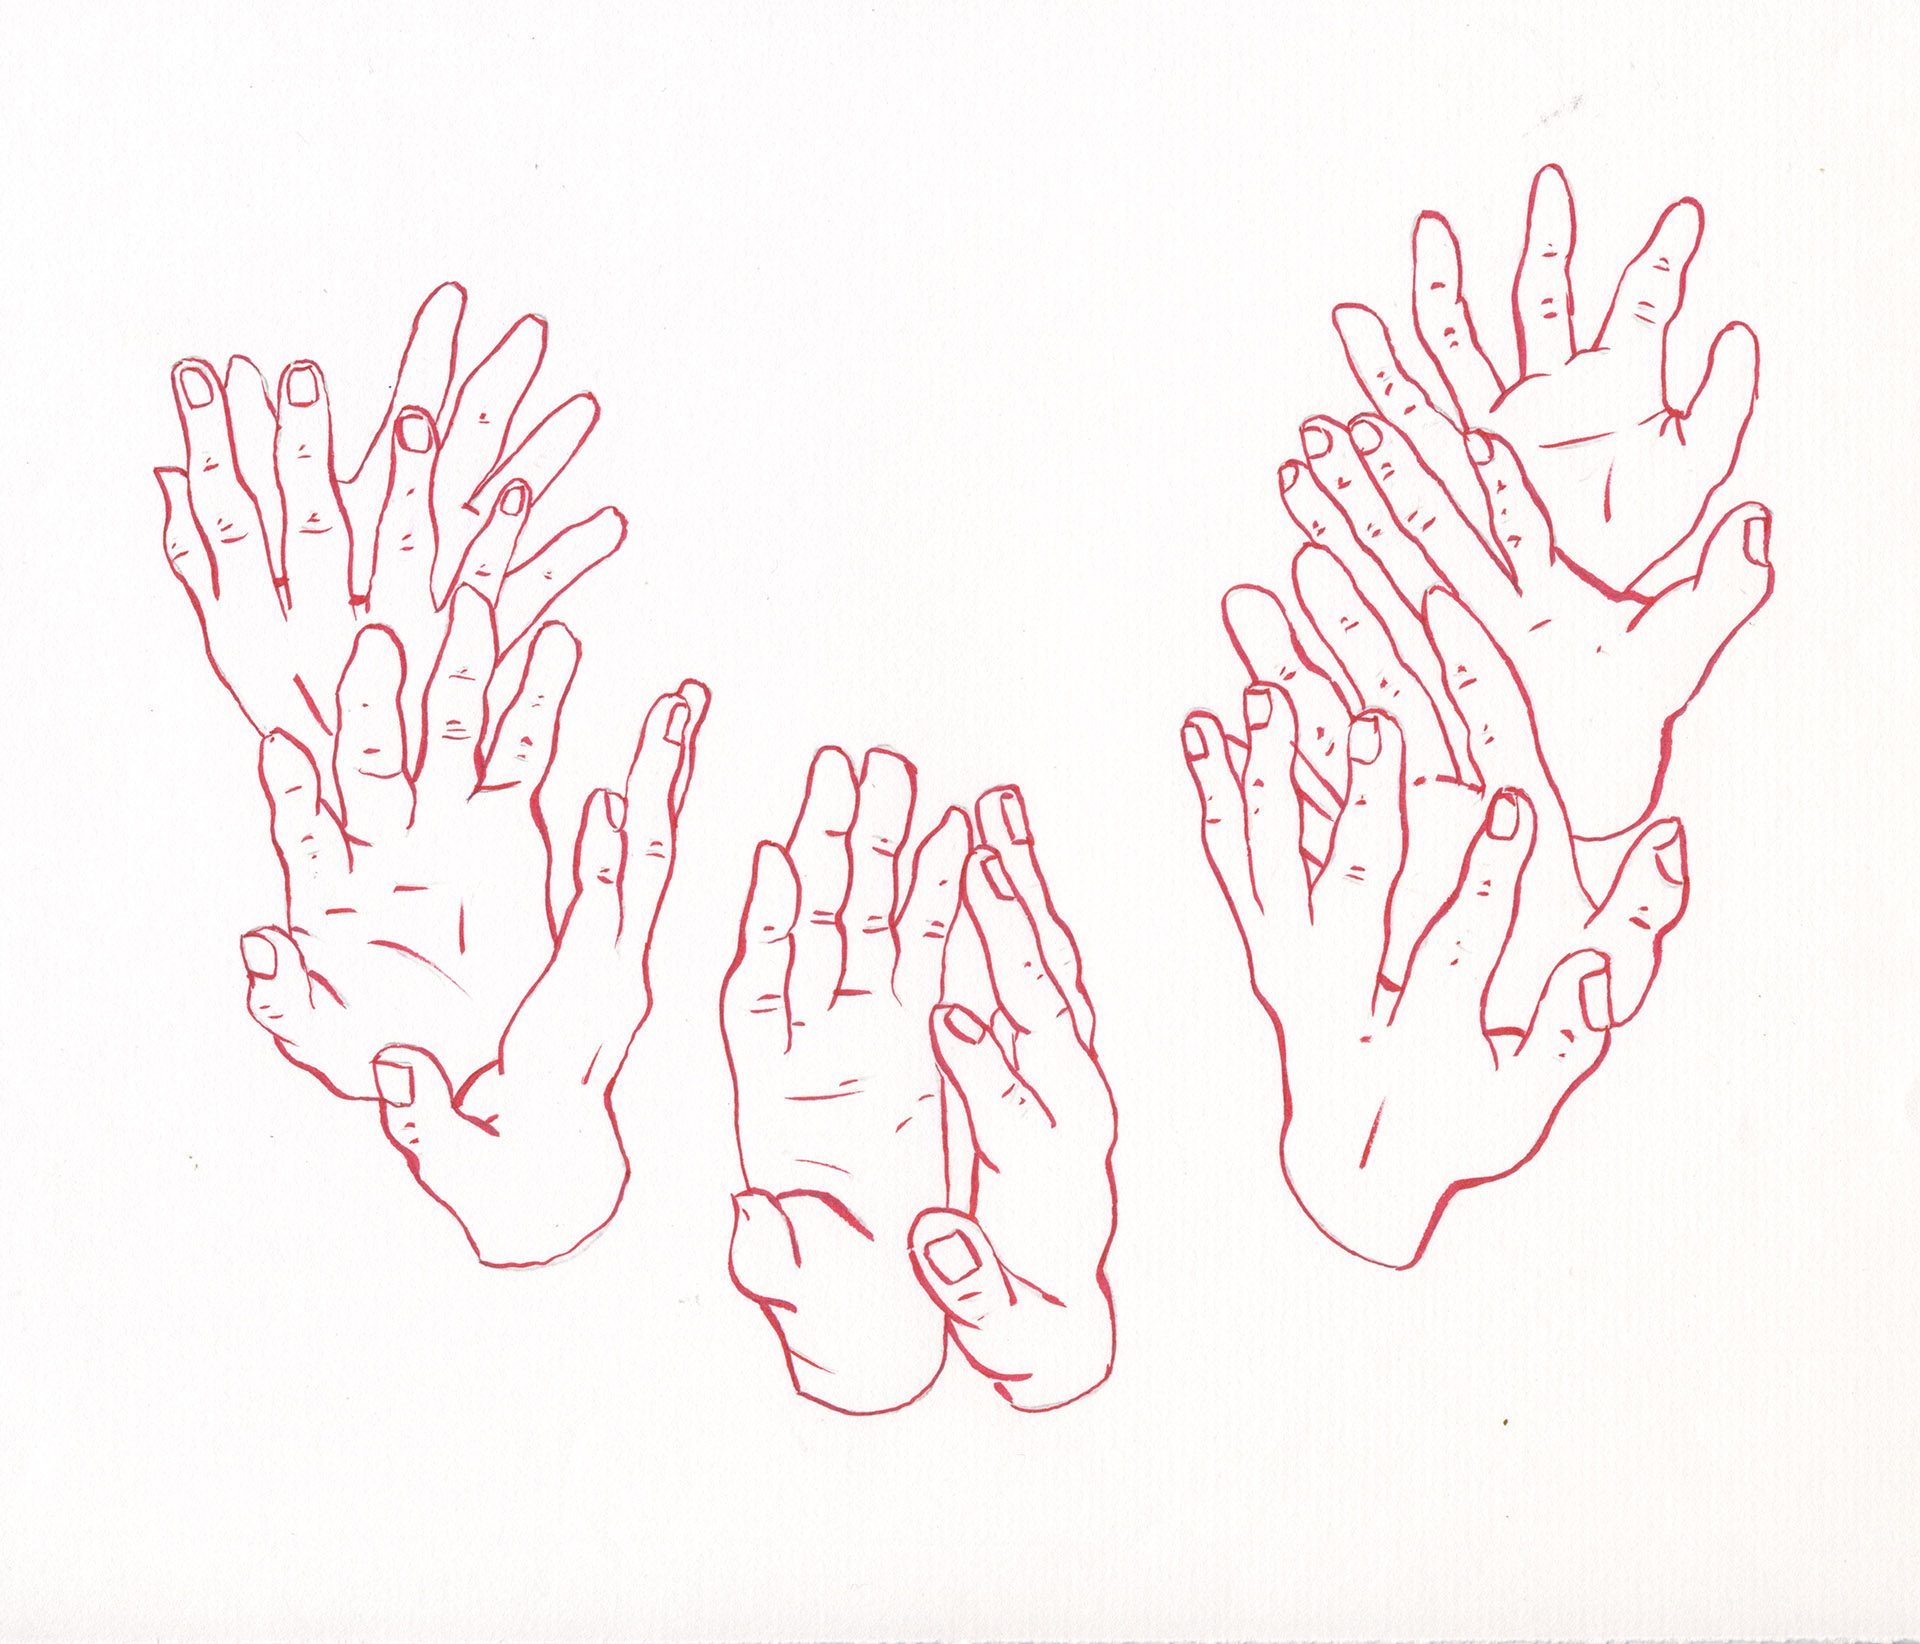 Hands I
ink on paper
25x21cm